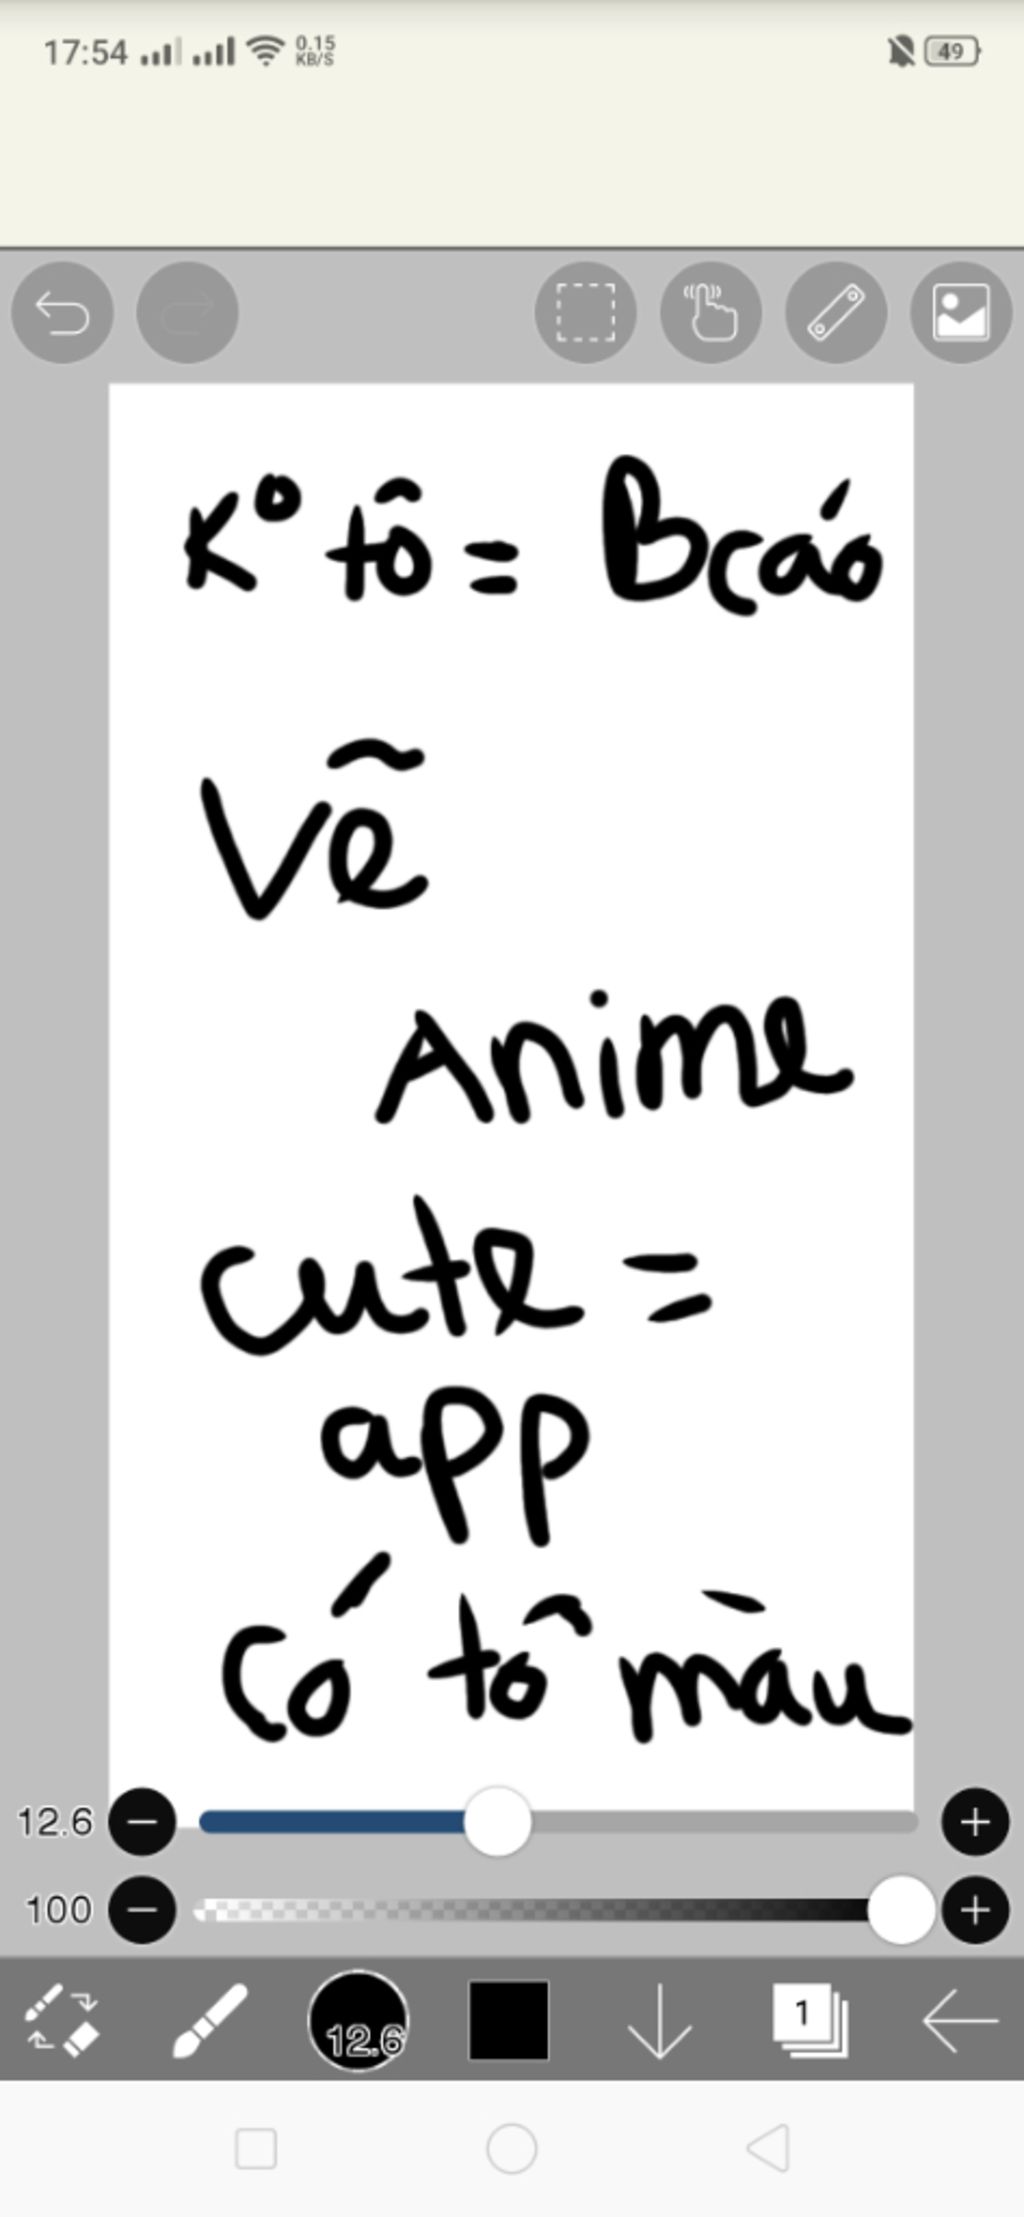 17:54 ..l l  KB/S 49 K° tô = Bcás Anime cute= app có to %3D Co mau   100 1 126 +